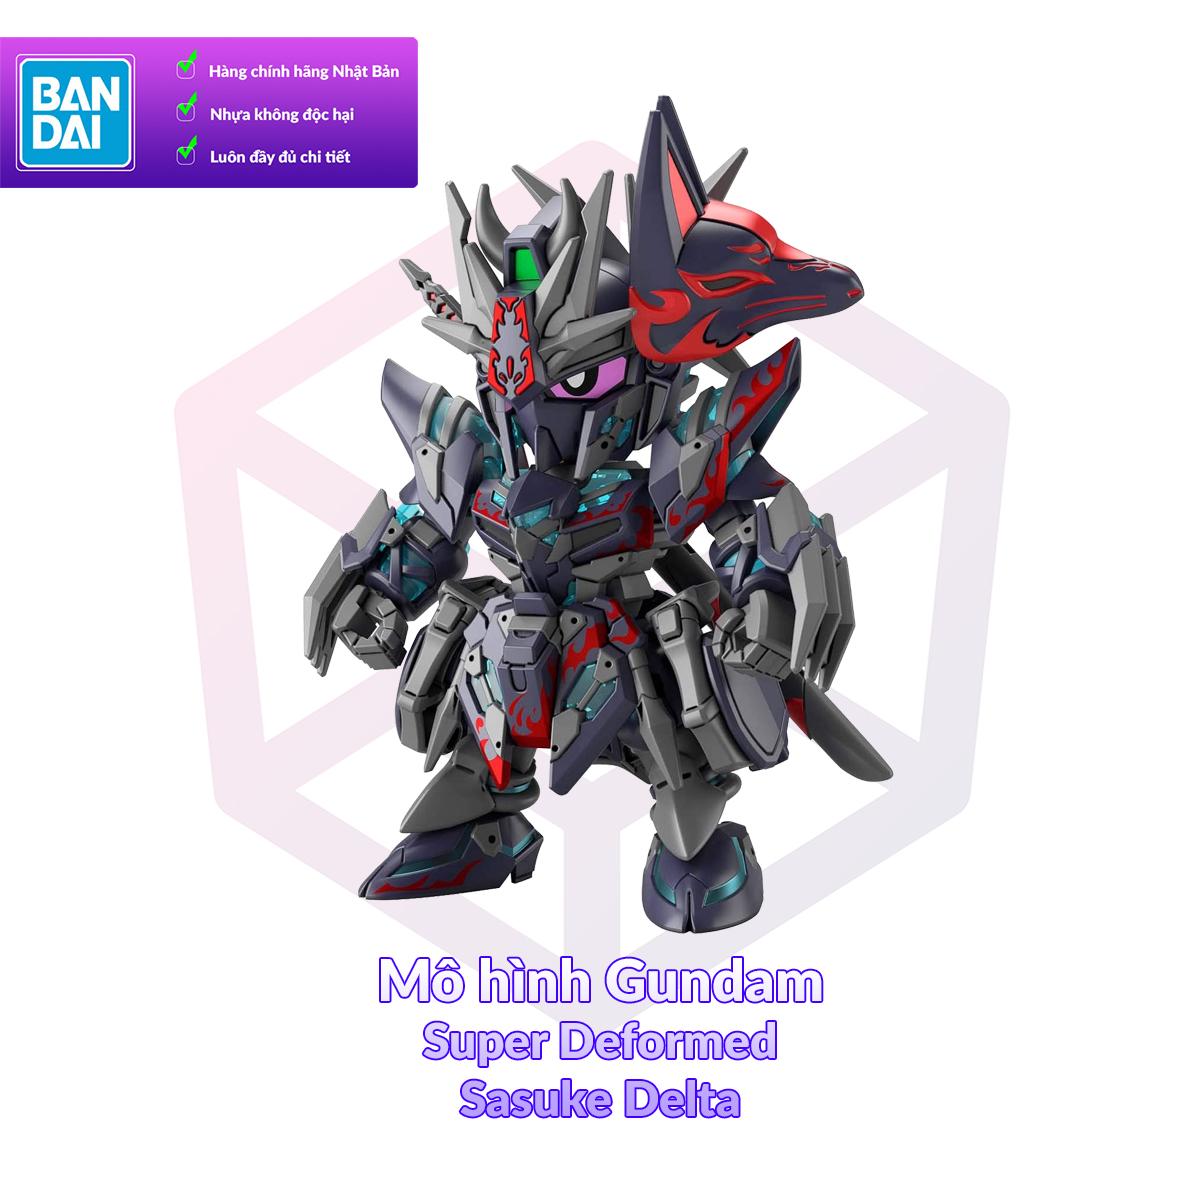 7-11 12 VOUCHER 8%Mô Hình Gundam Bandai SDW Heroes 06 Sasuke Delta SD